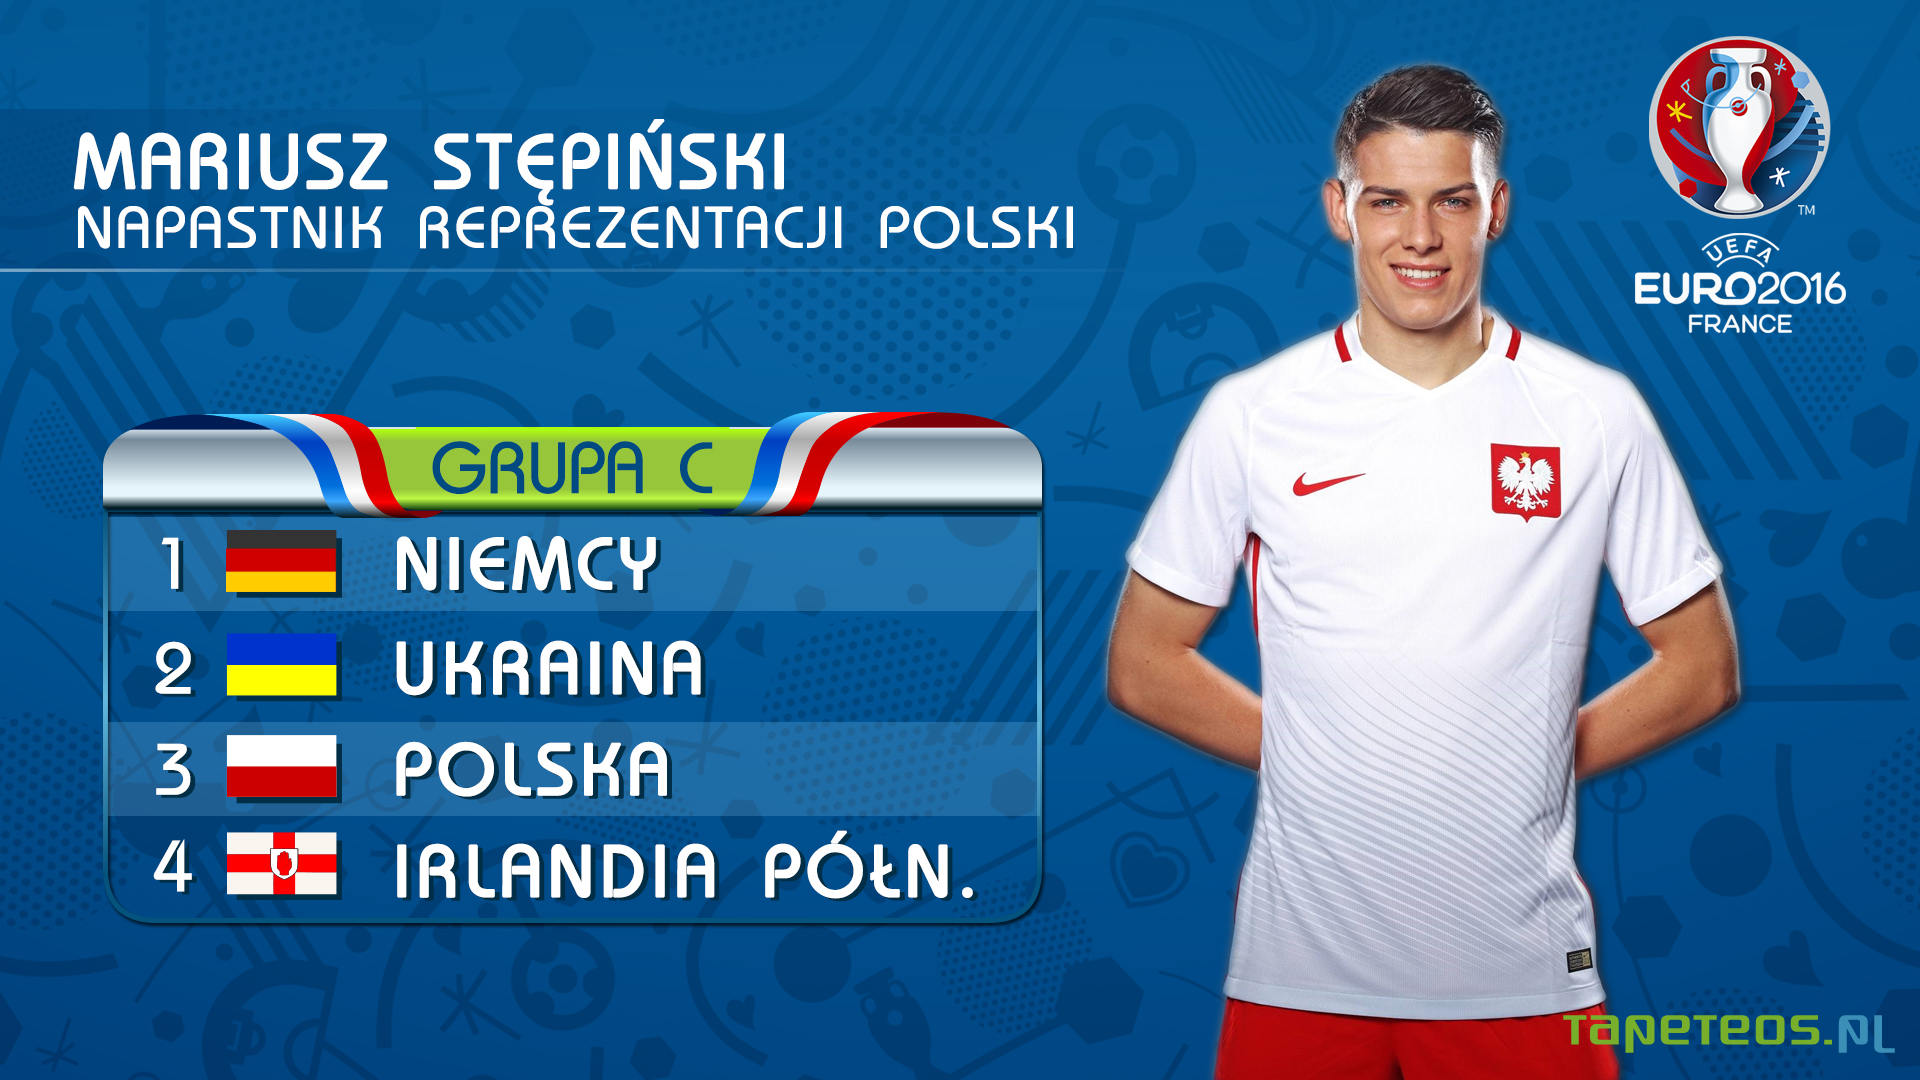 UEFA Euro 2016 Francja 057 Mariusz Stepinski, Polska, Grupa C